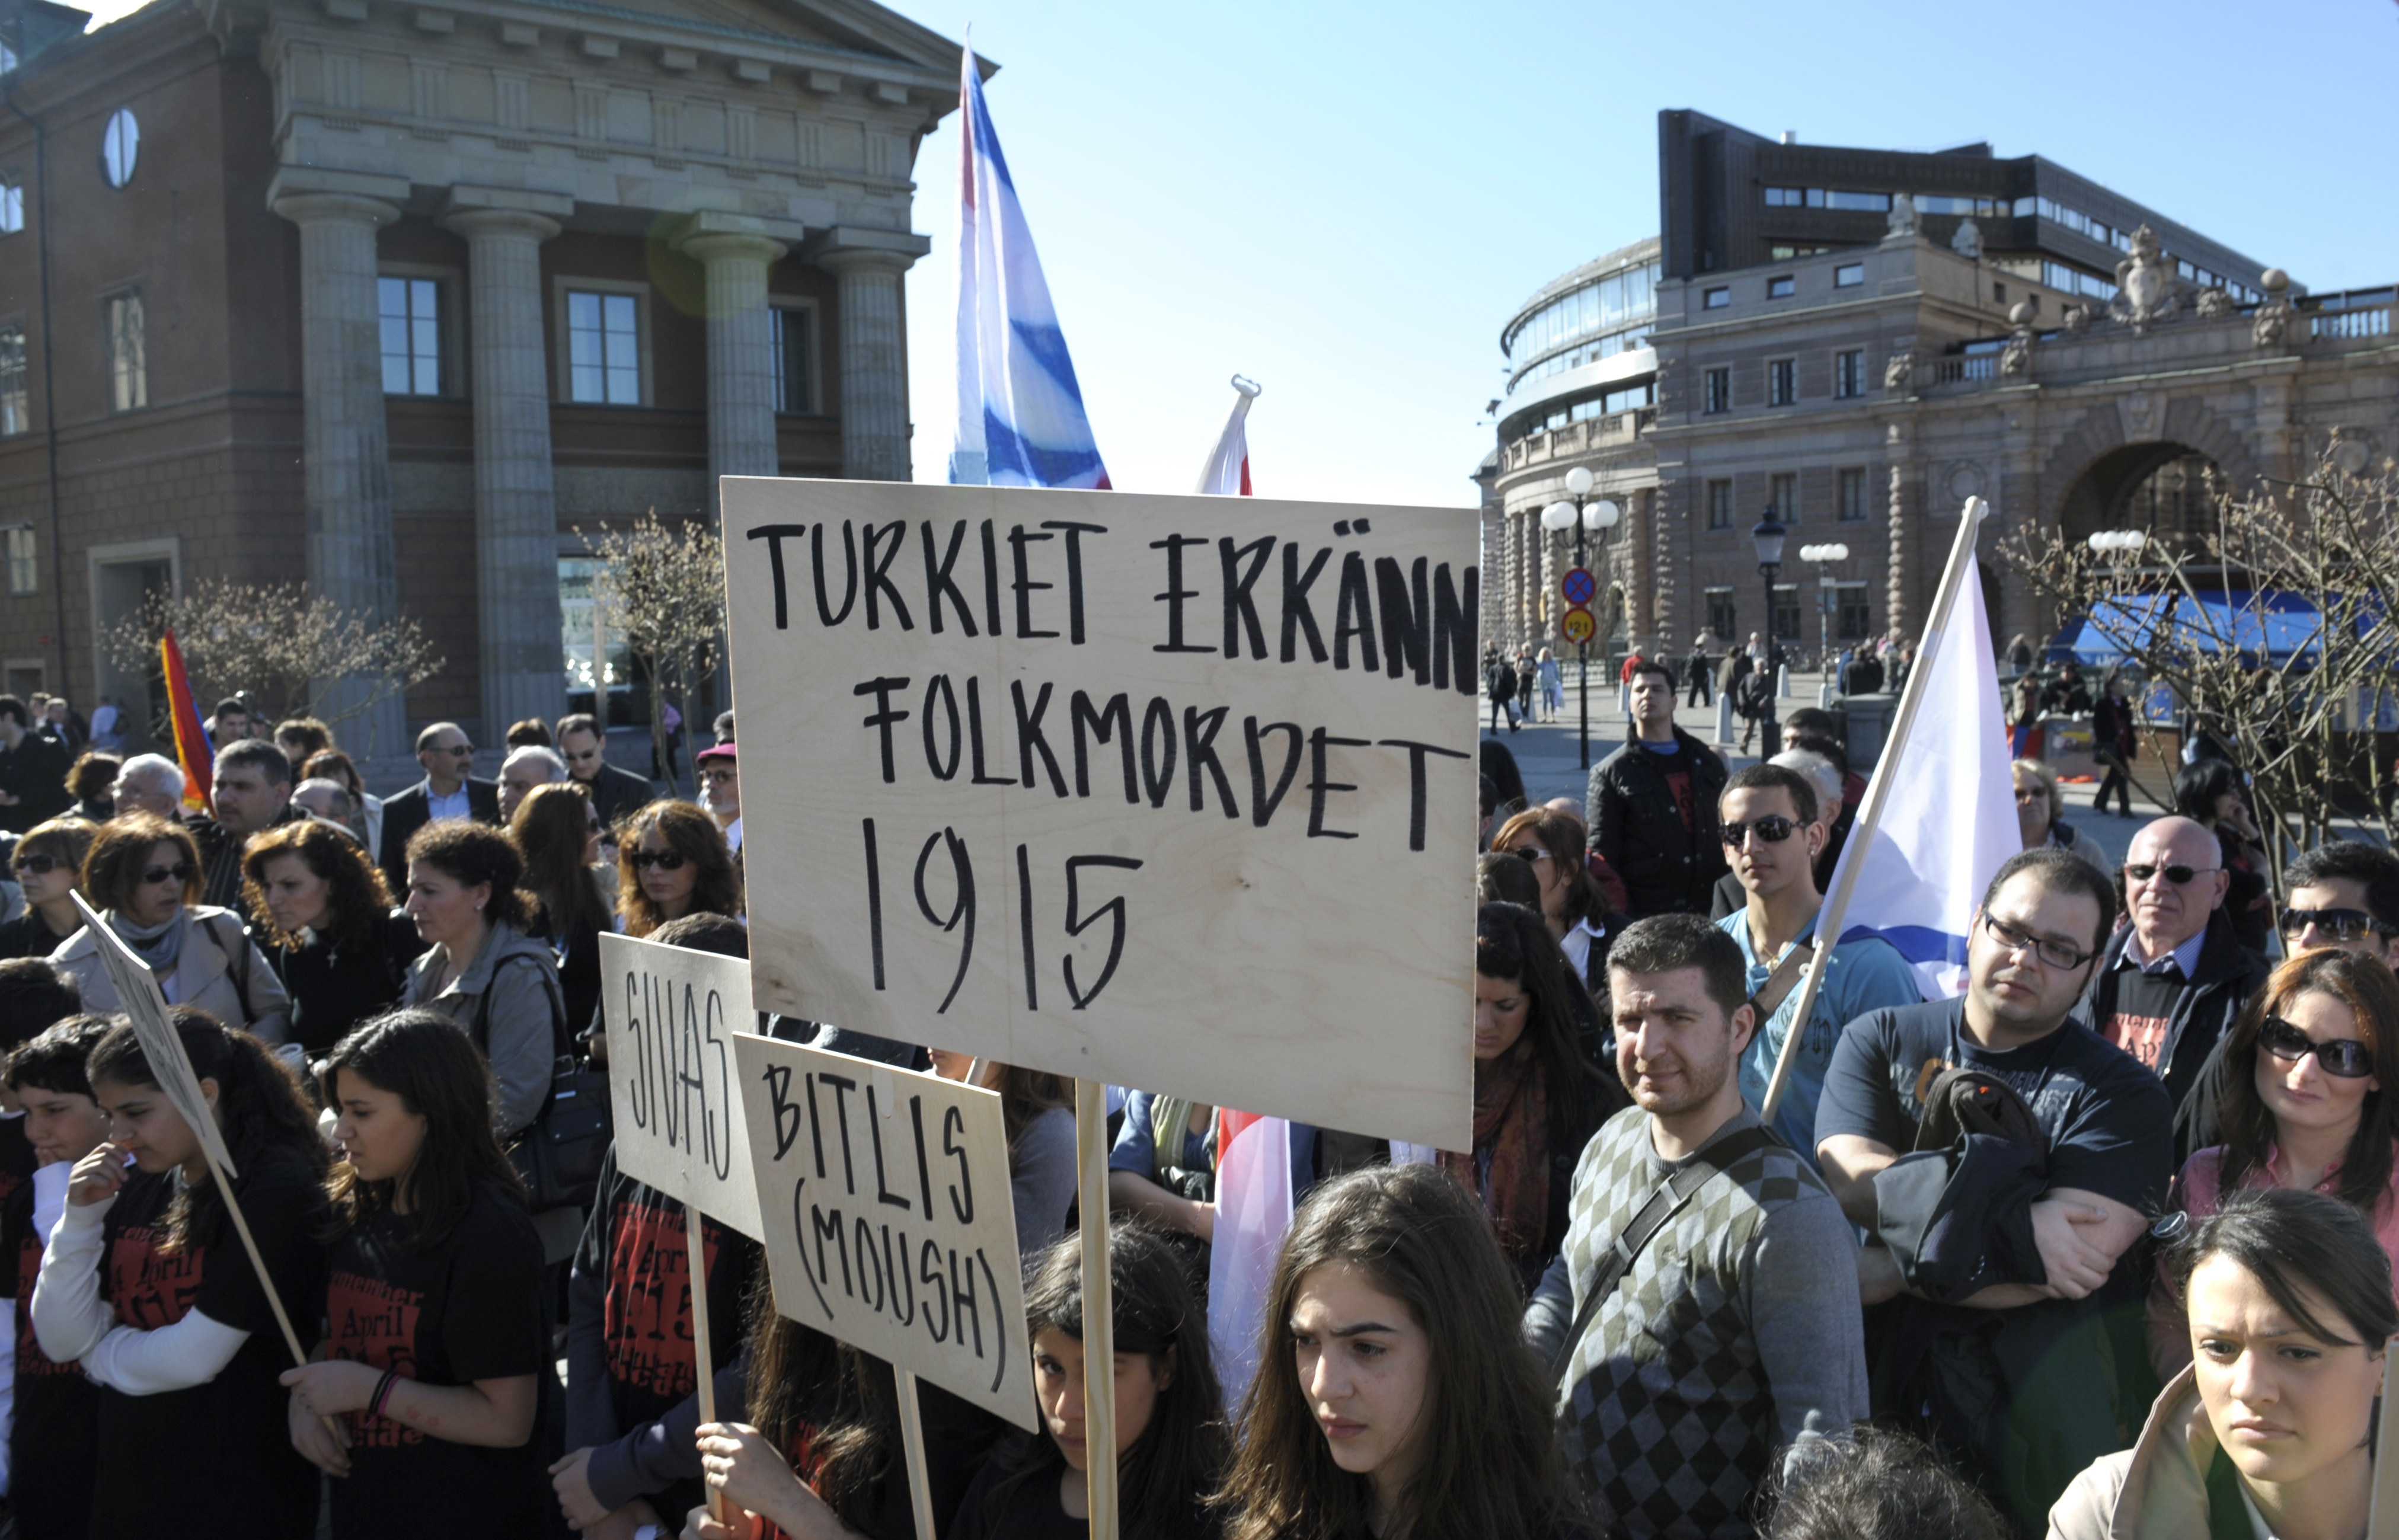 turkiet, Folkmord, Sverige, Armenier